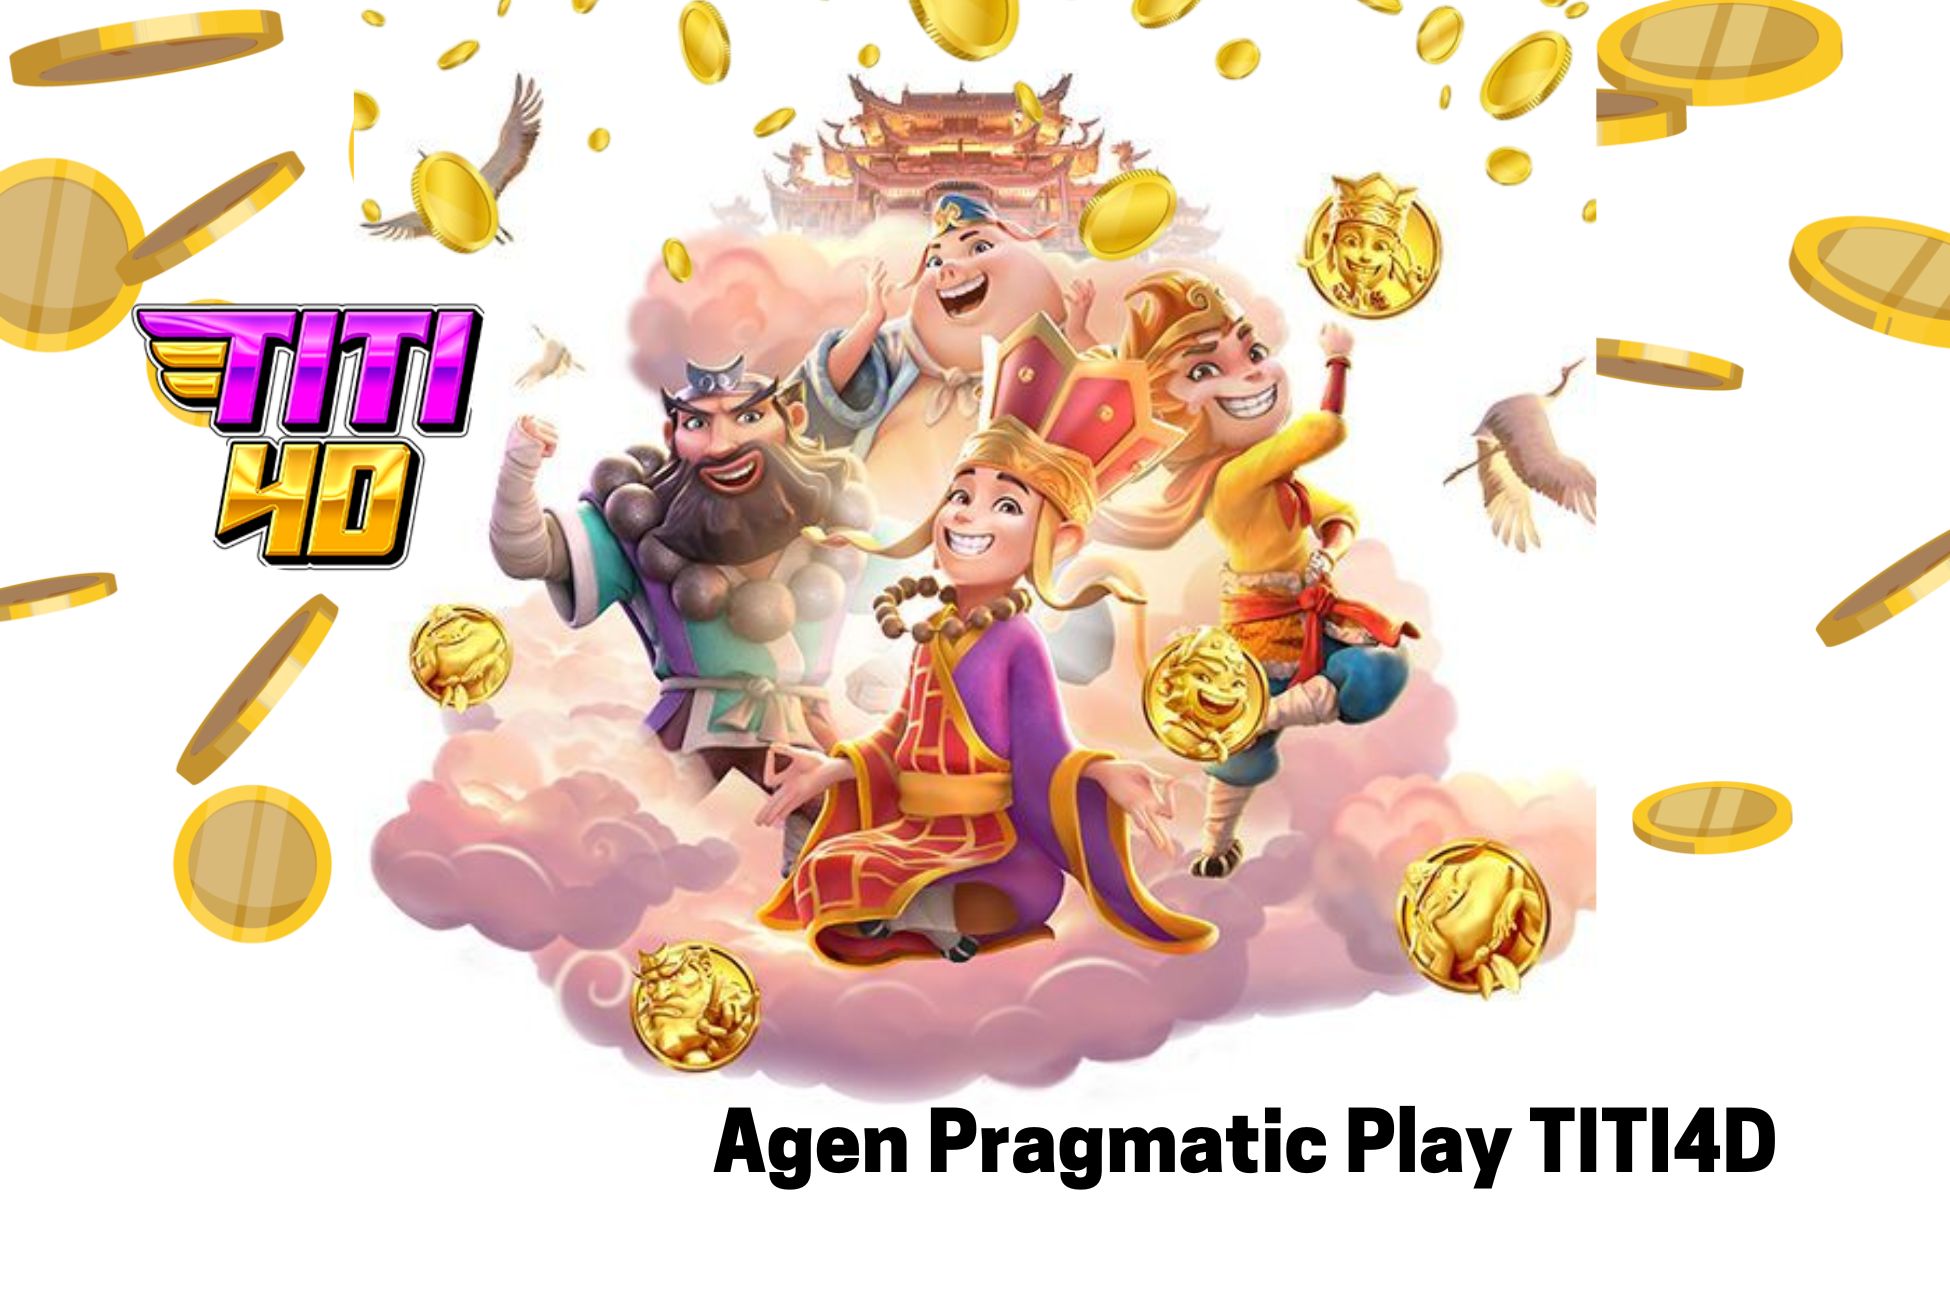 Agen Pragmatic Play TITI4D